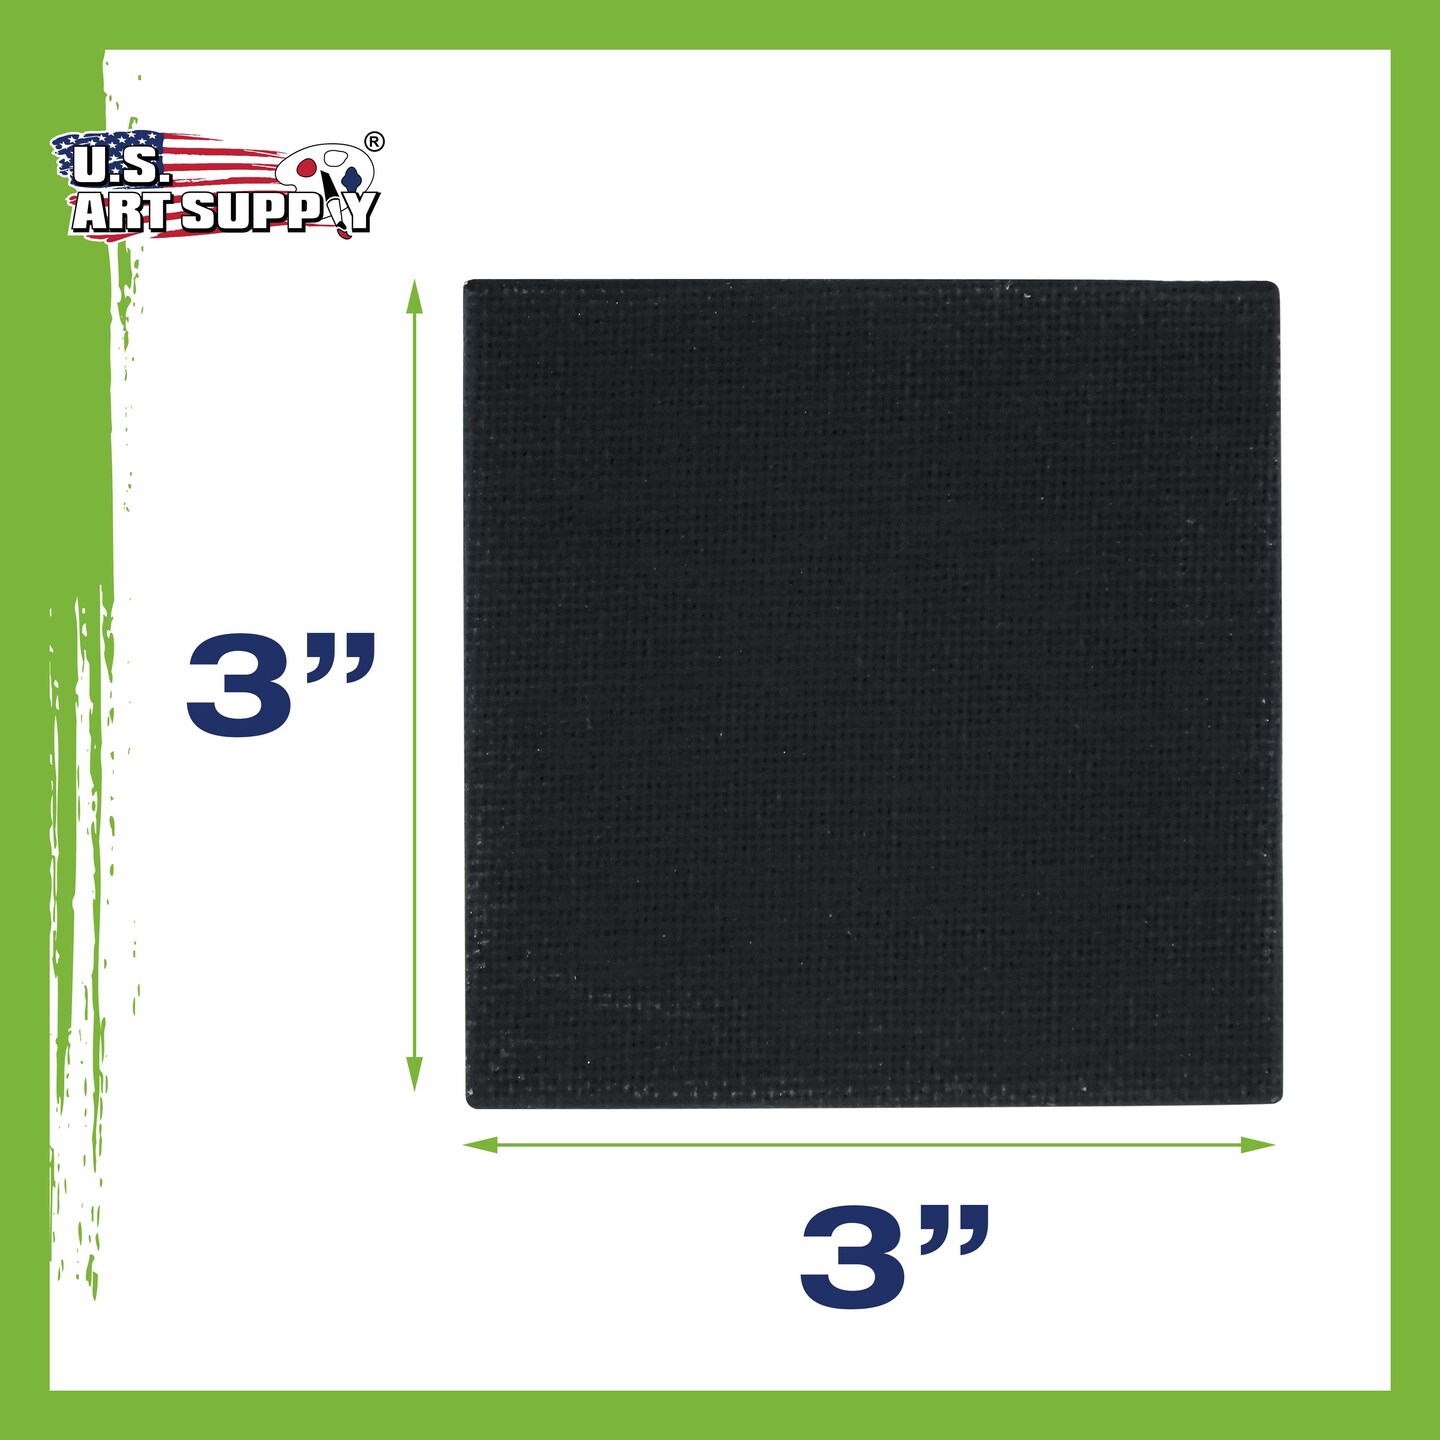 3&#x22; x 3&#x22; Black Mini Professional Primed Stretched Canvas 12 Pack